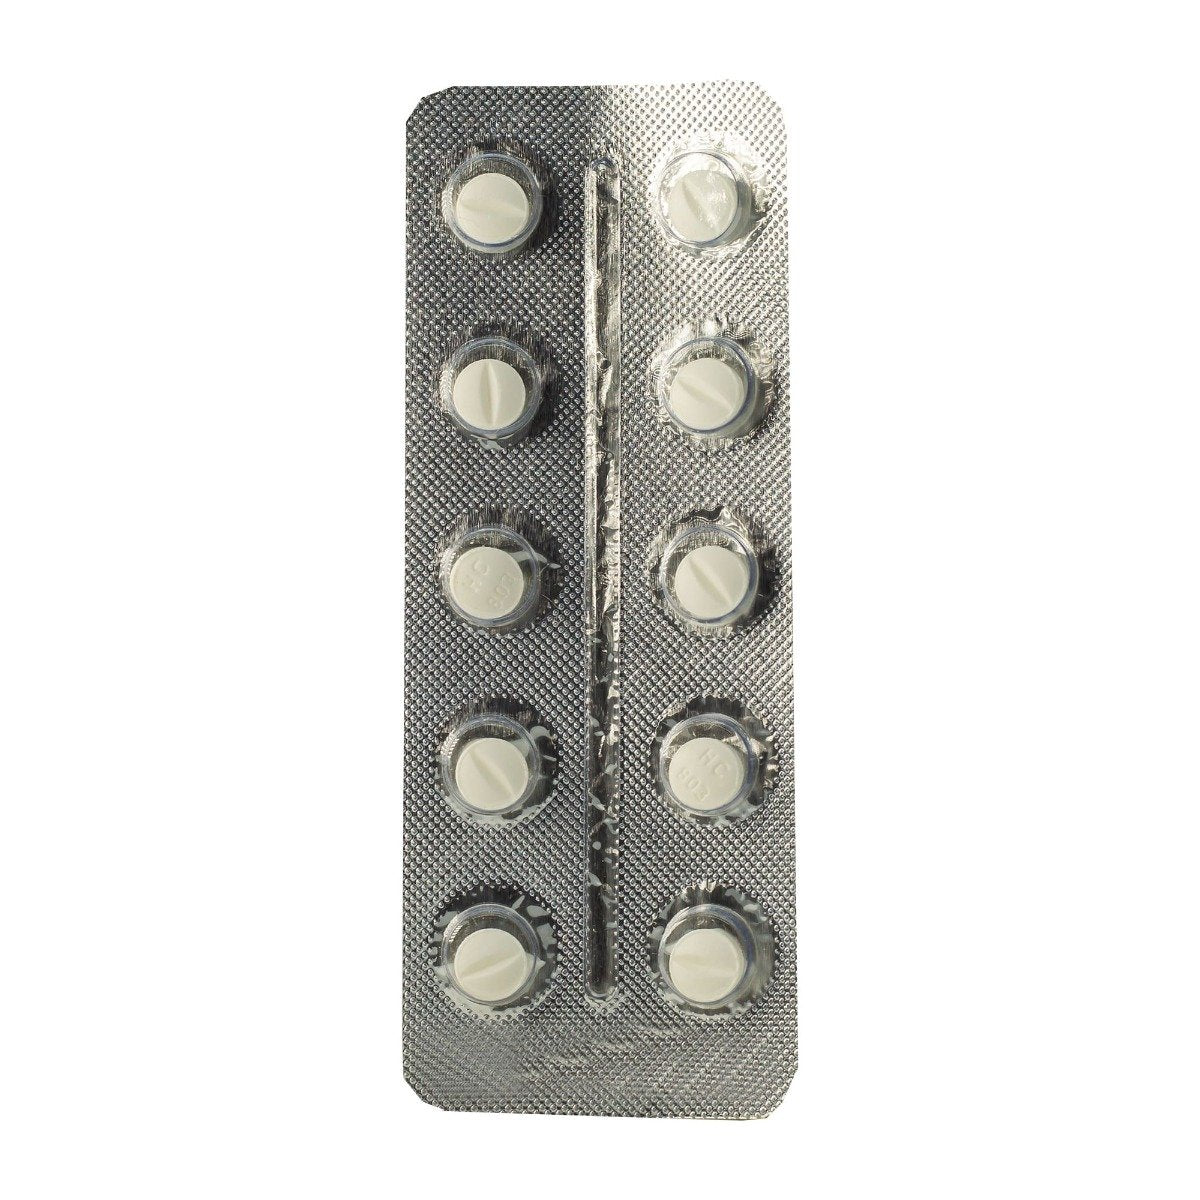 Ganaton 50 mg - 30 Tablets - Bloom Pharmacy